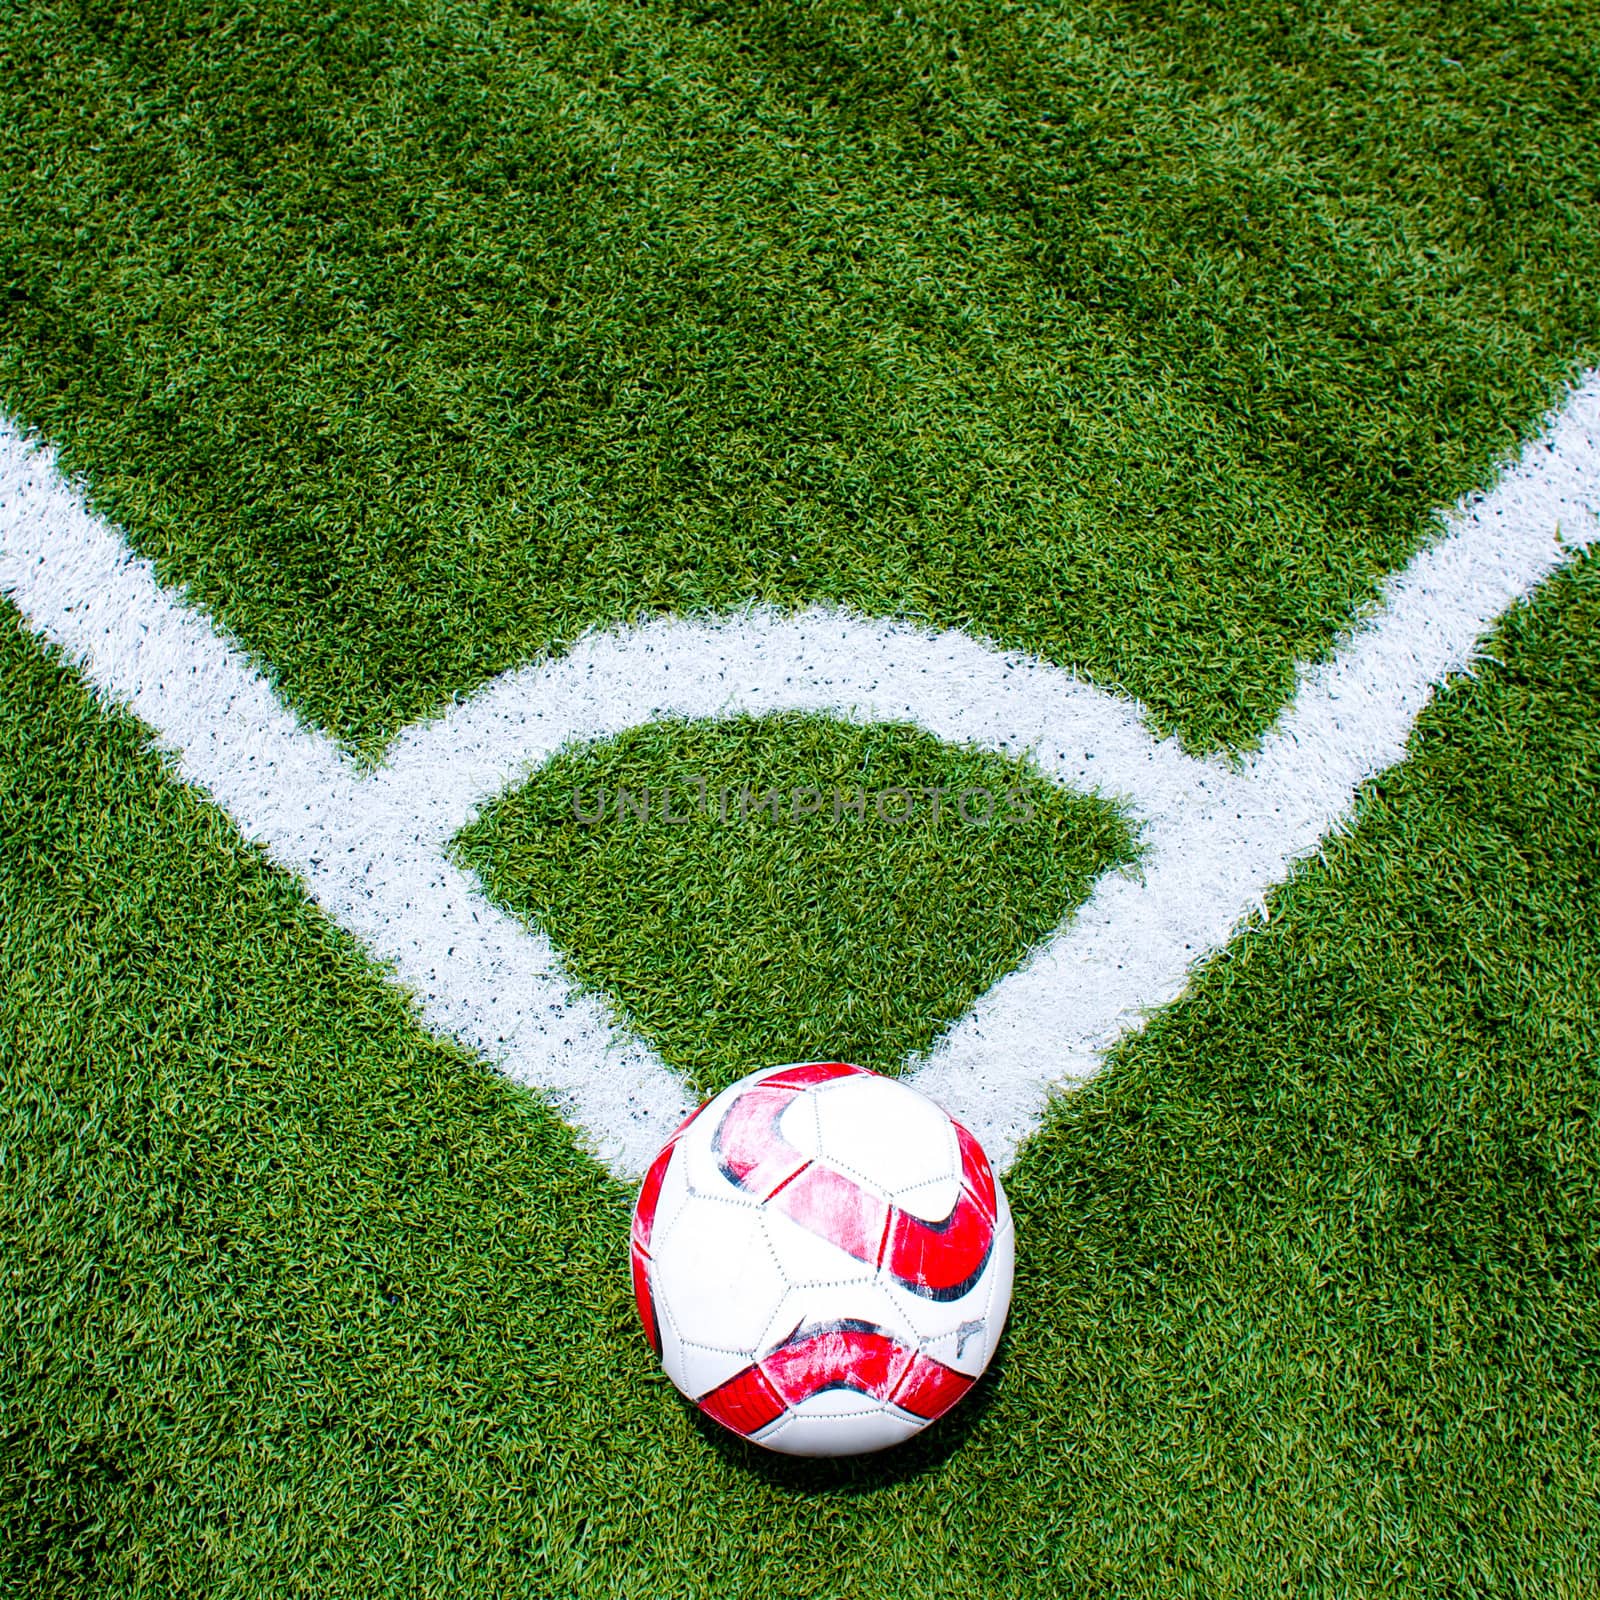 Soccer ball on the field corner by 2nix